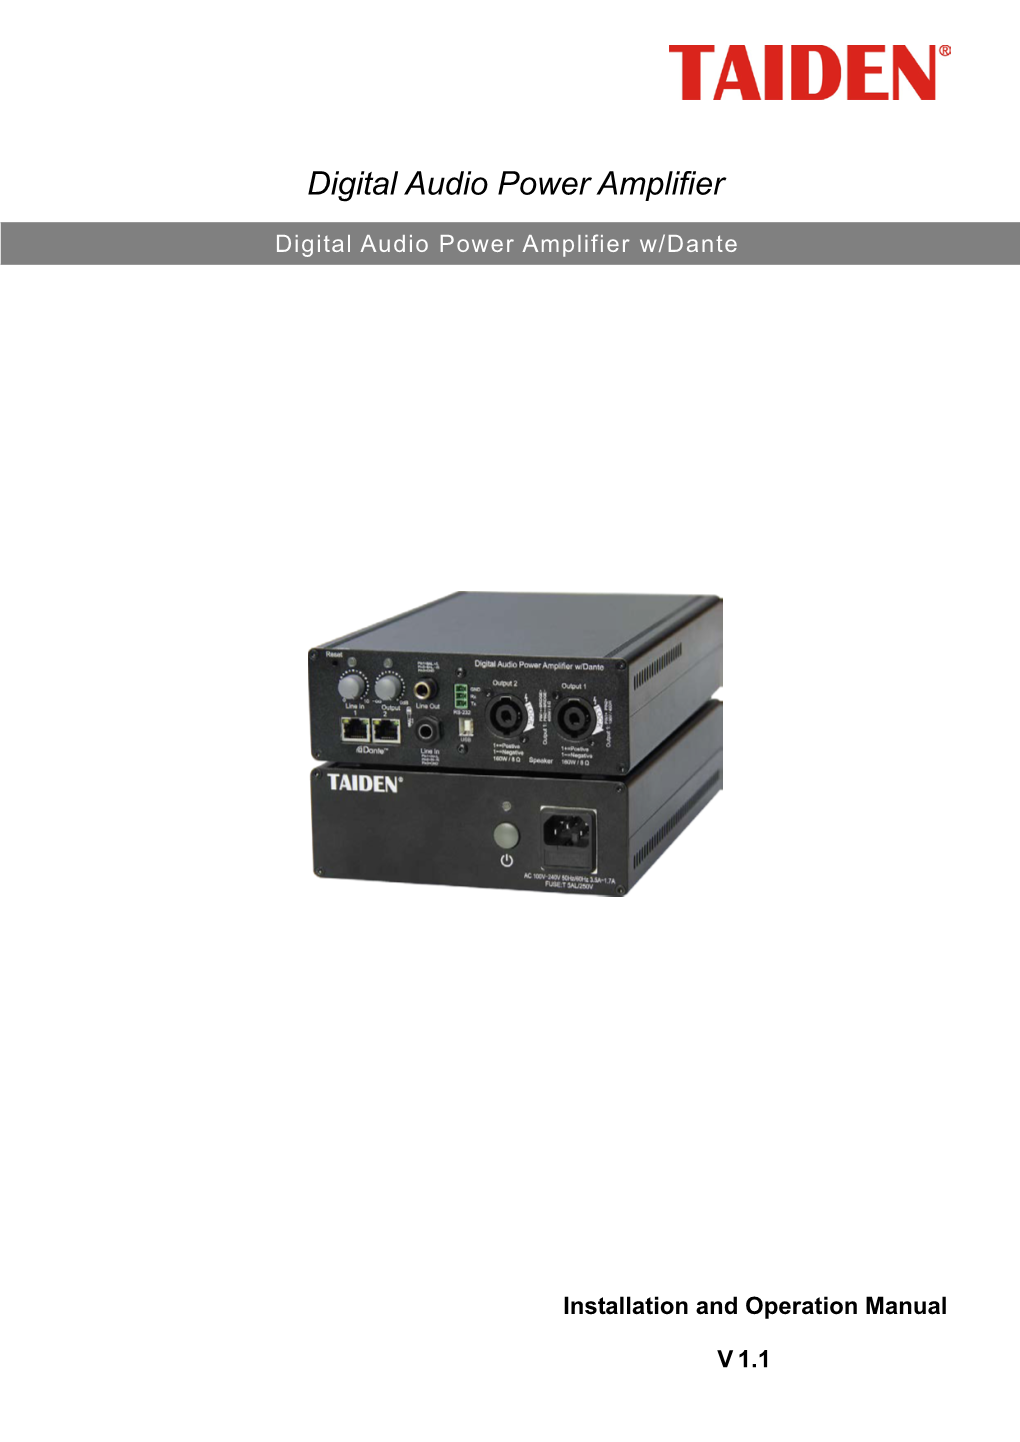 Digital Audio Power Amplifier